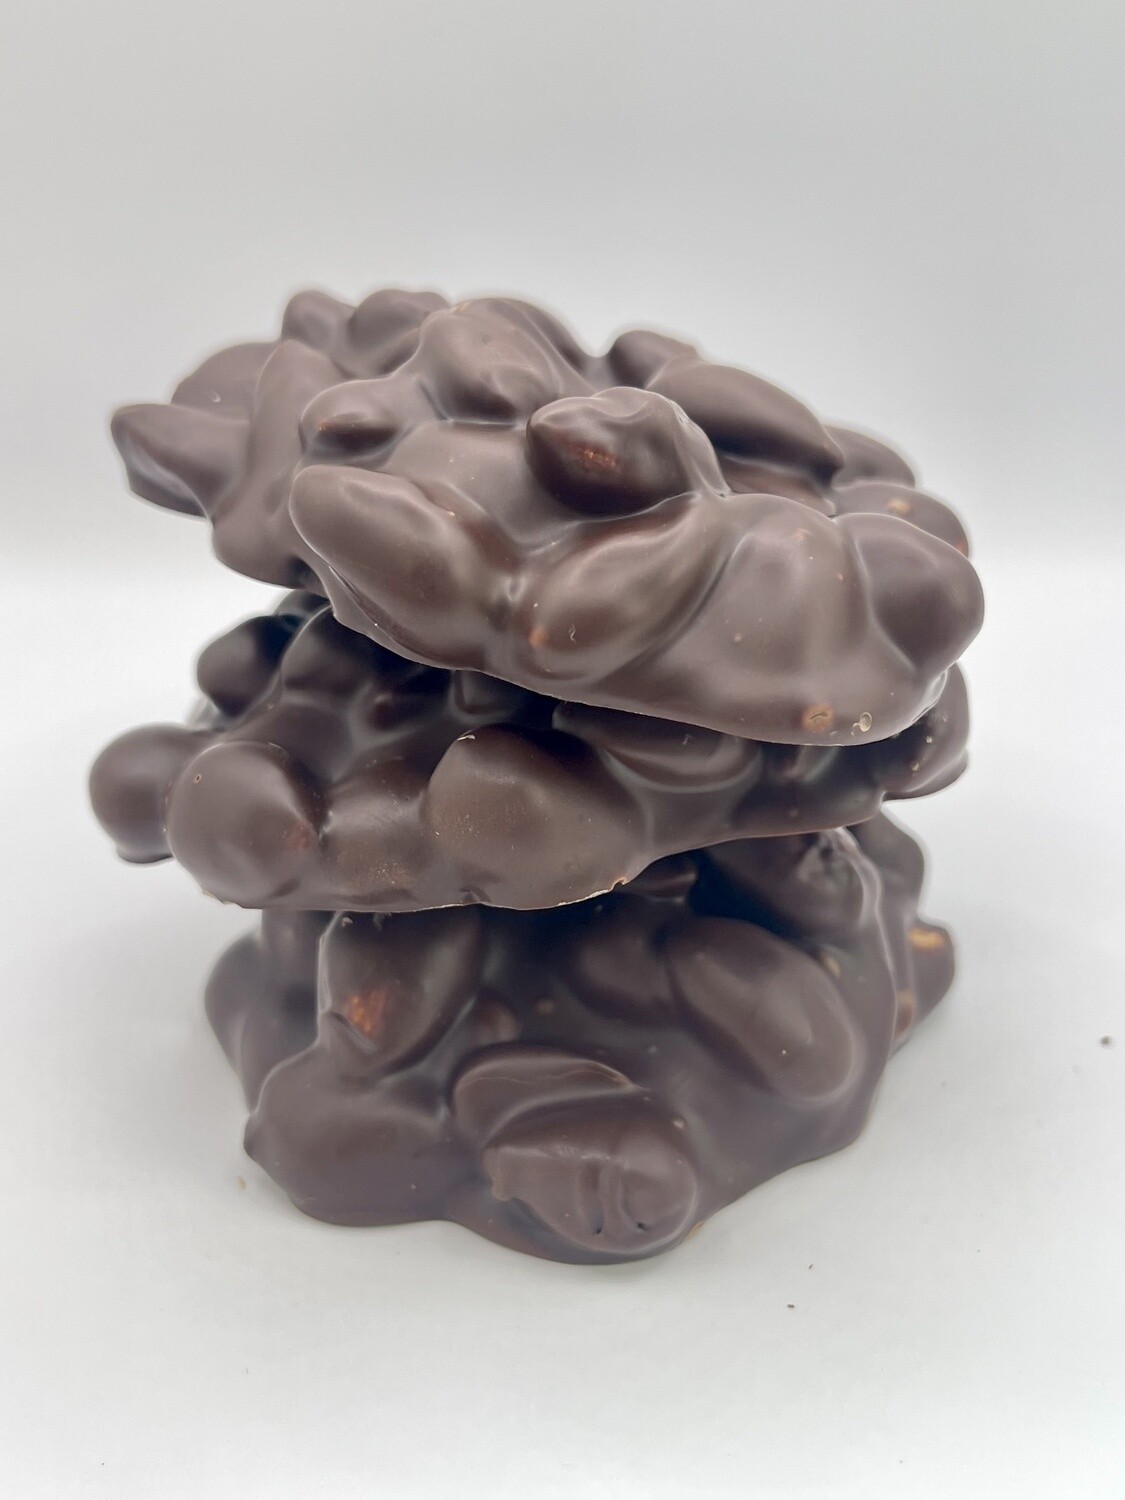 Dark Chocolate Almond Cluster